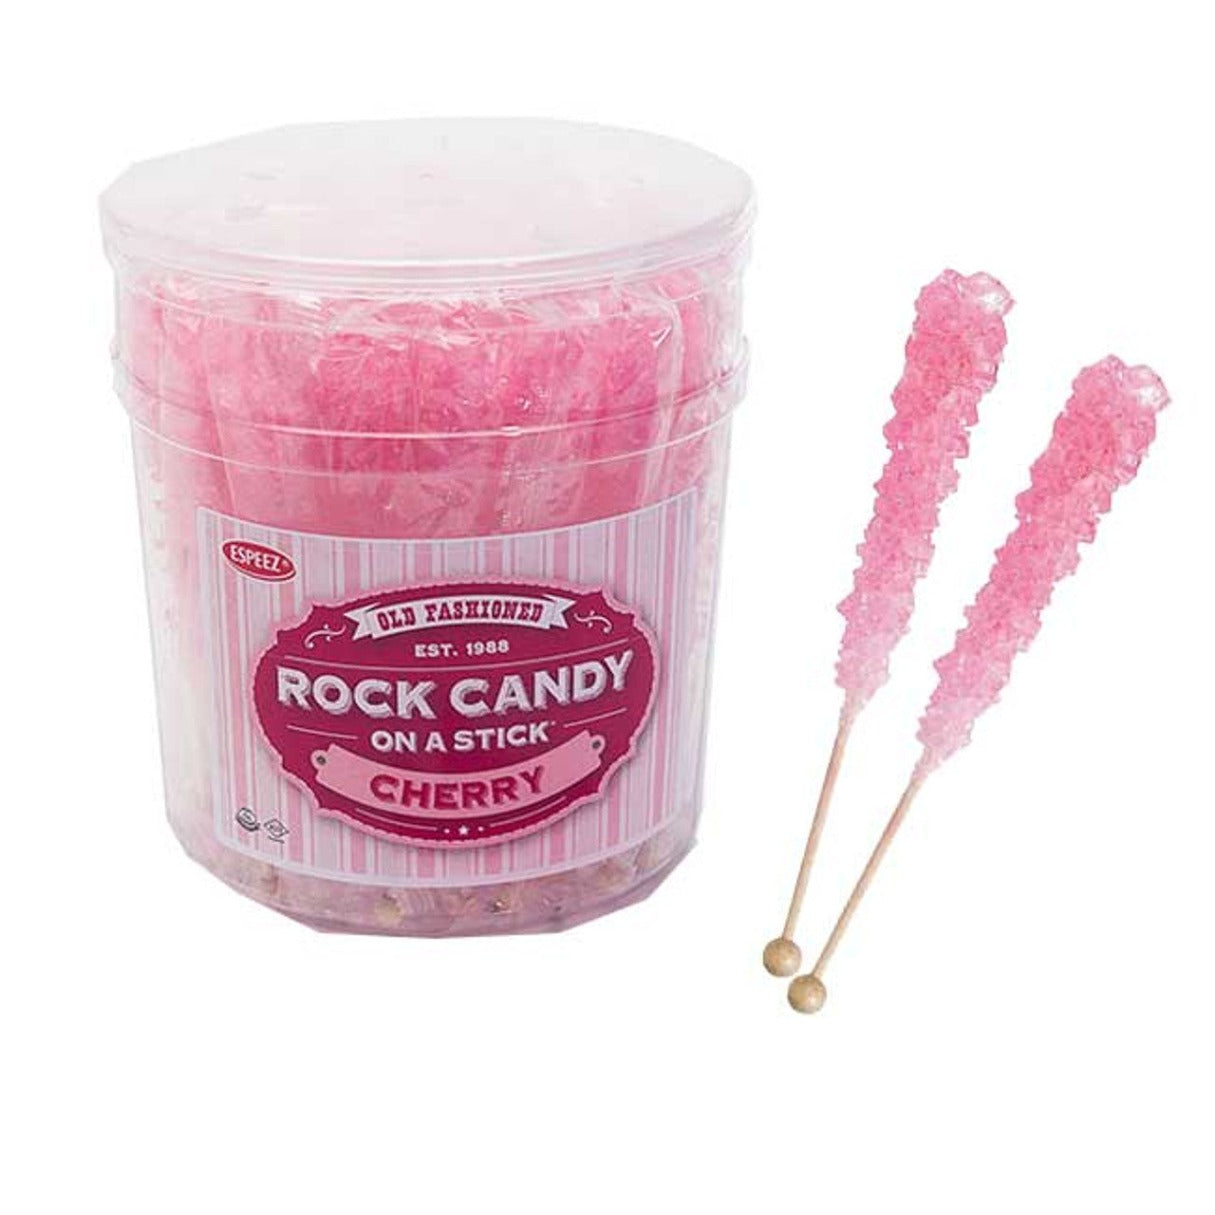 Espeez Rock Candy Sticks Pink Cherry Jar 0.8oz - 36ct